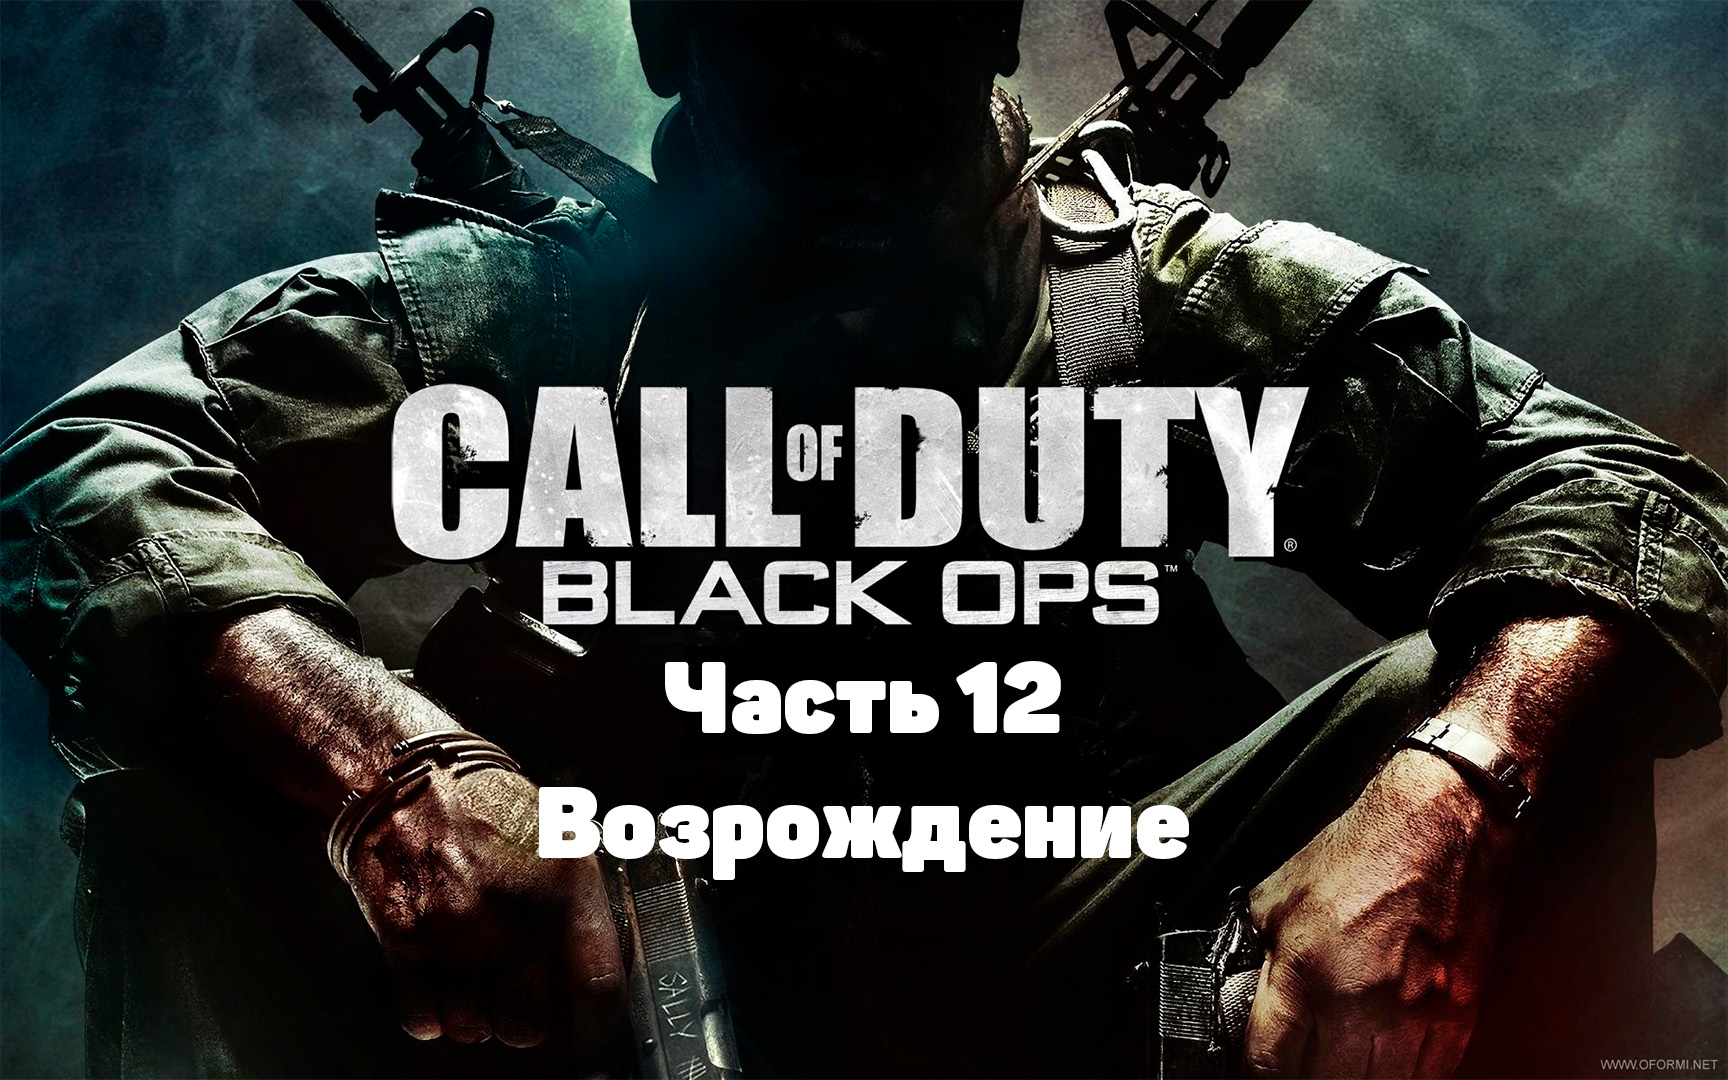 Call of Duty: Black Ops Часть 12 Возрождение (Прохождение) #callofduty #blackops #2022 #gametour